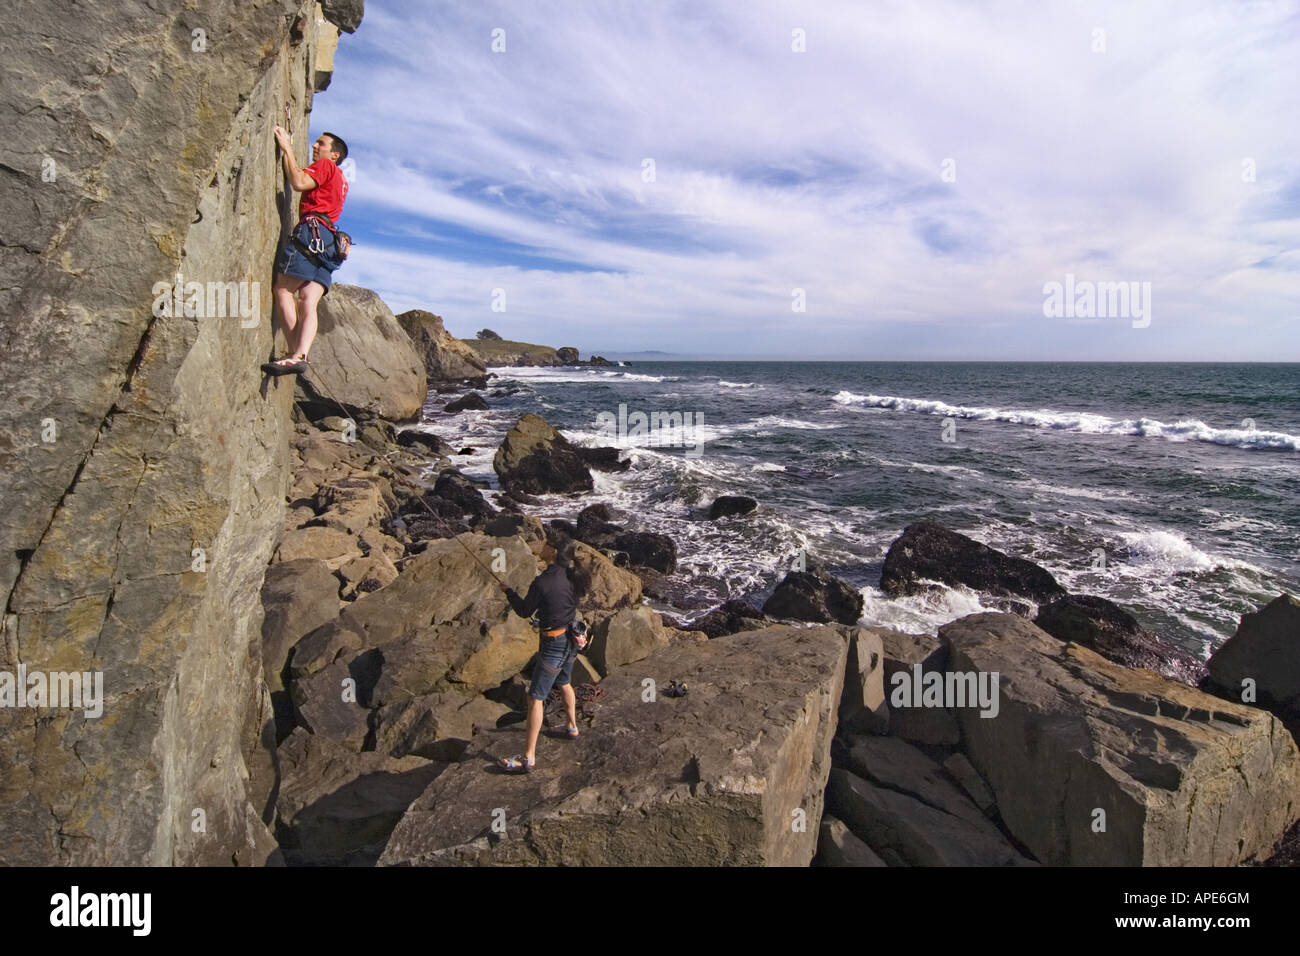 A man and a woman rock climbing next to the Pacific Ocean at Mickey's Beach near Stinson Beach in California Stock Photo